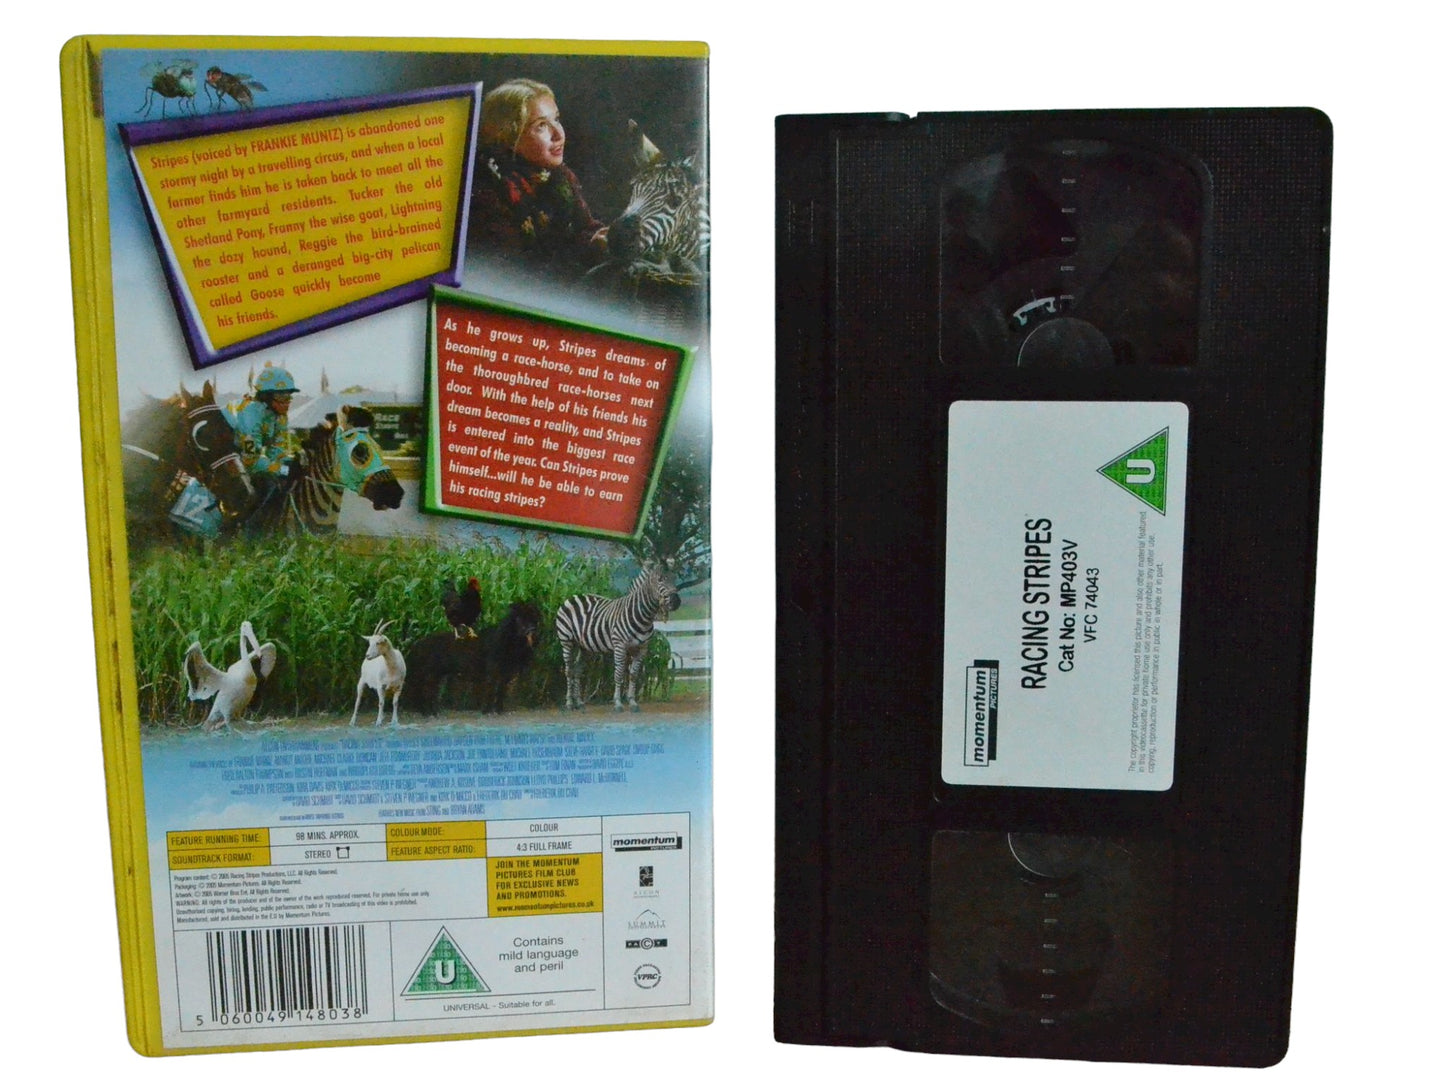 Racing Stripes - Frankie Muniz - Momentum Pictures - Childrens - PAL - VHS-